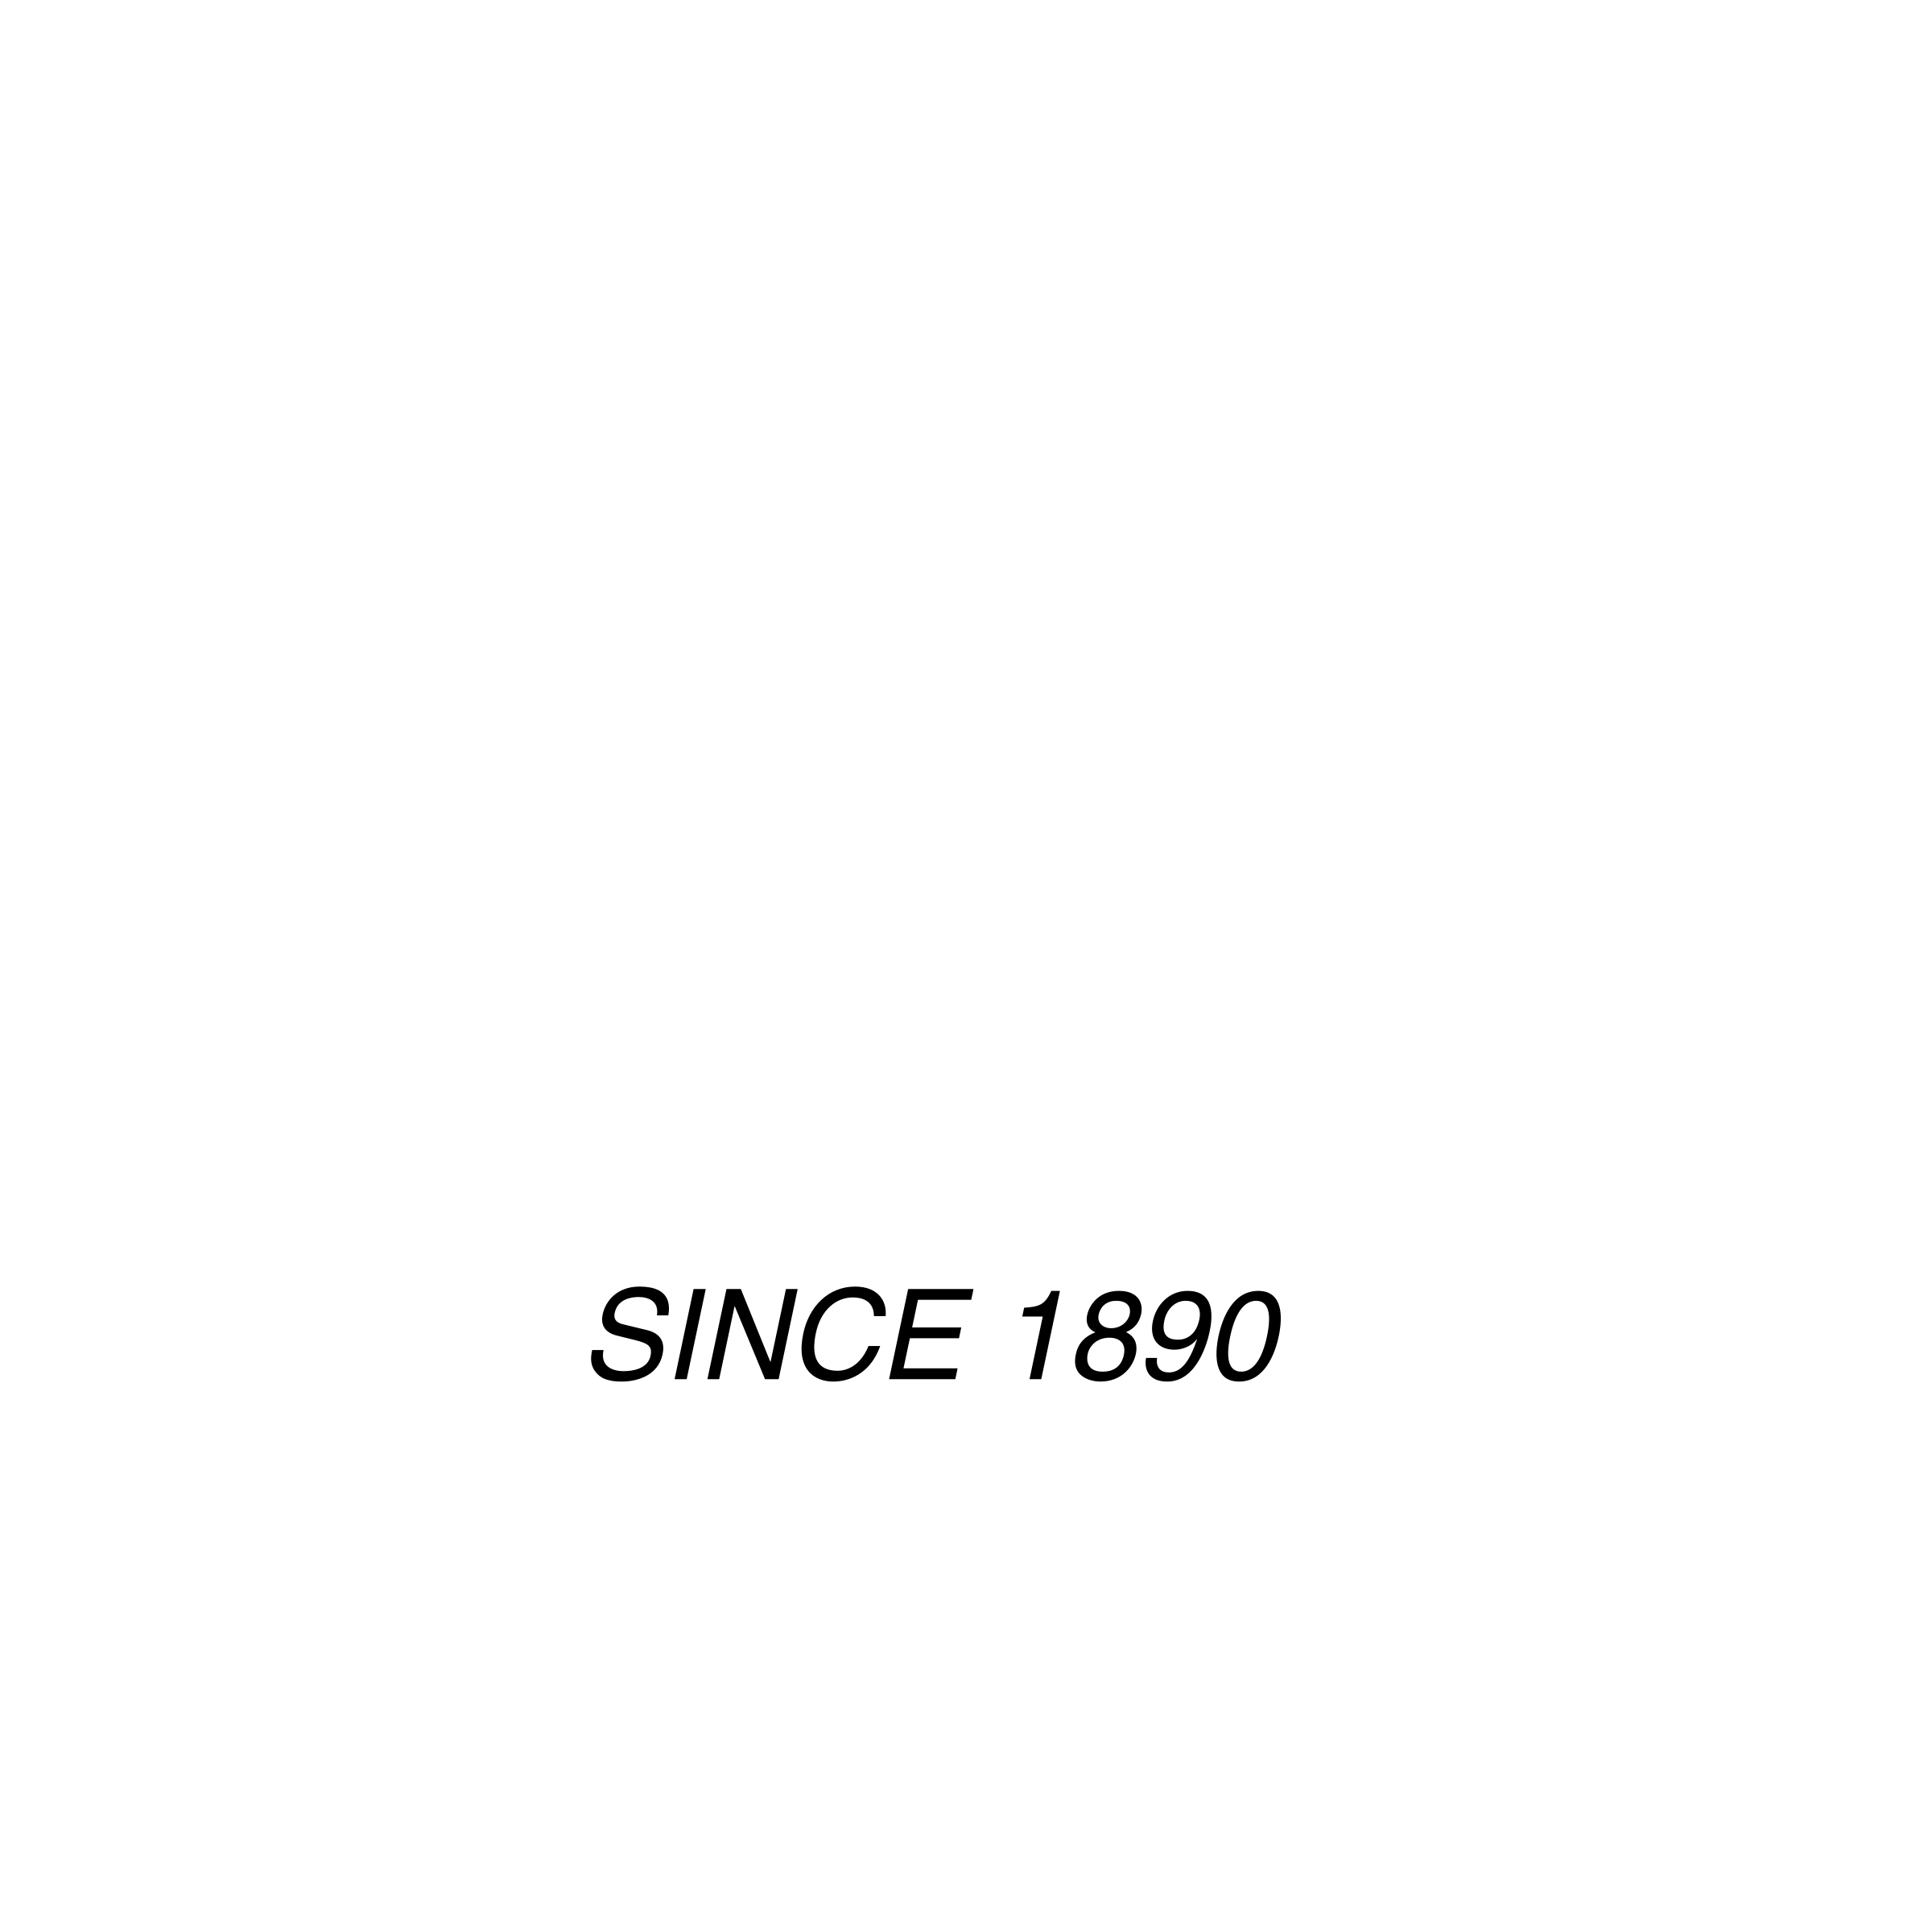 Conn's Logo - Conn's Logo PNG Transparent & SVG Vector